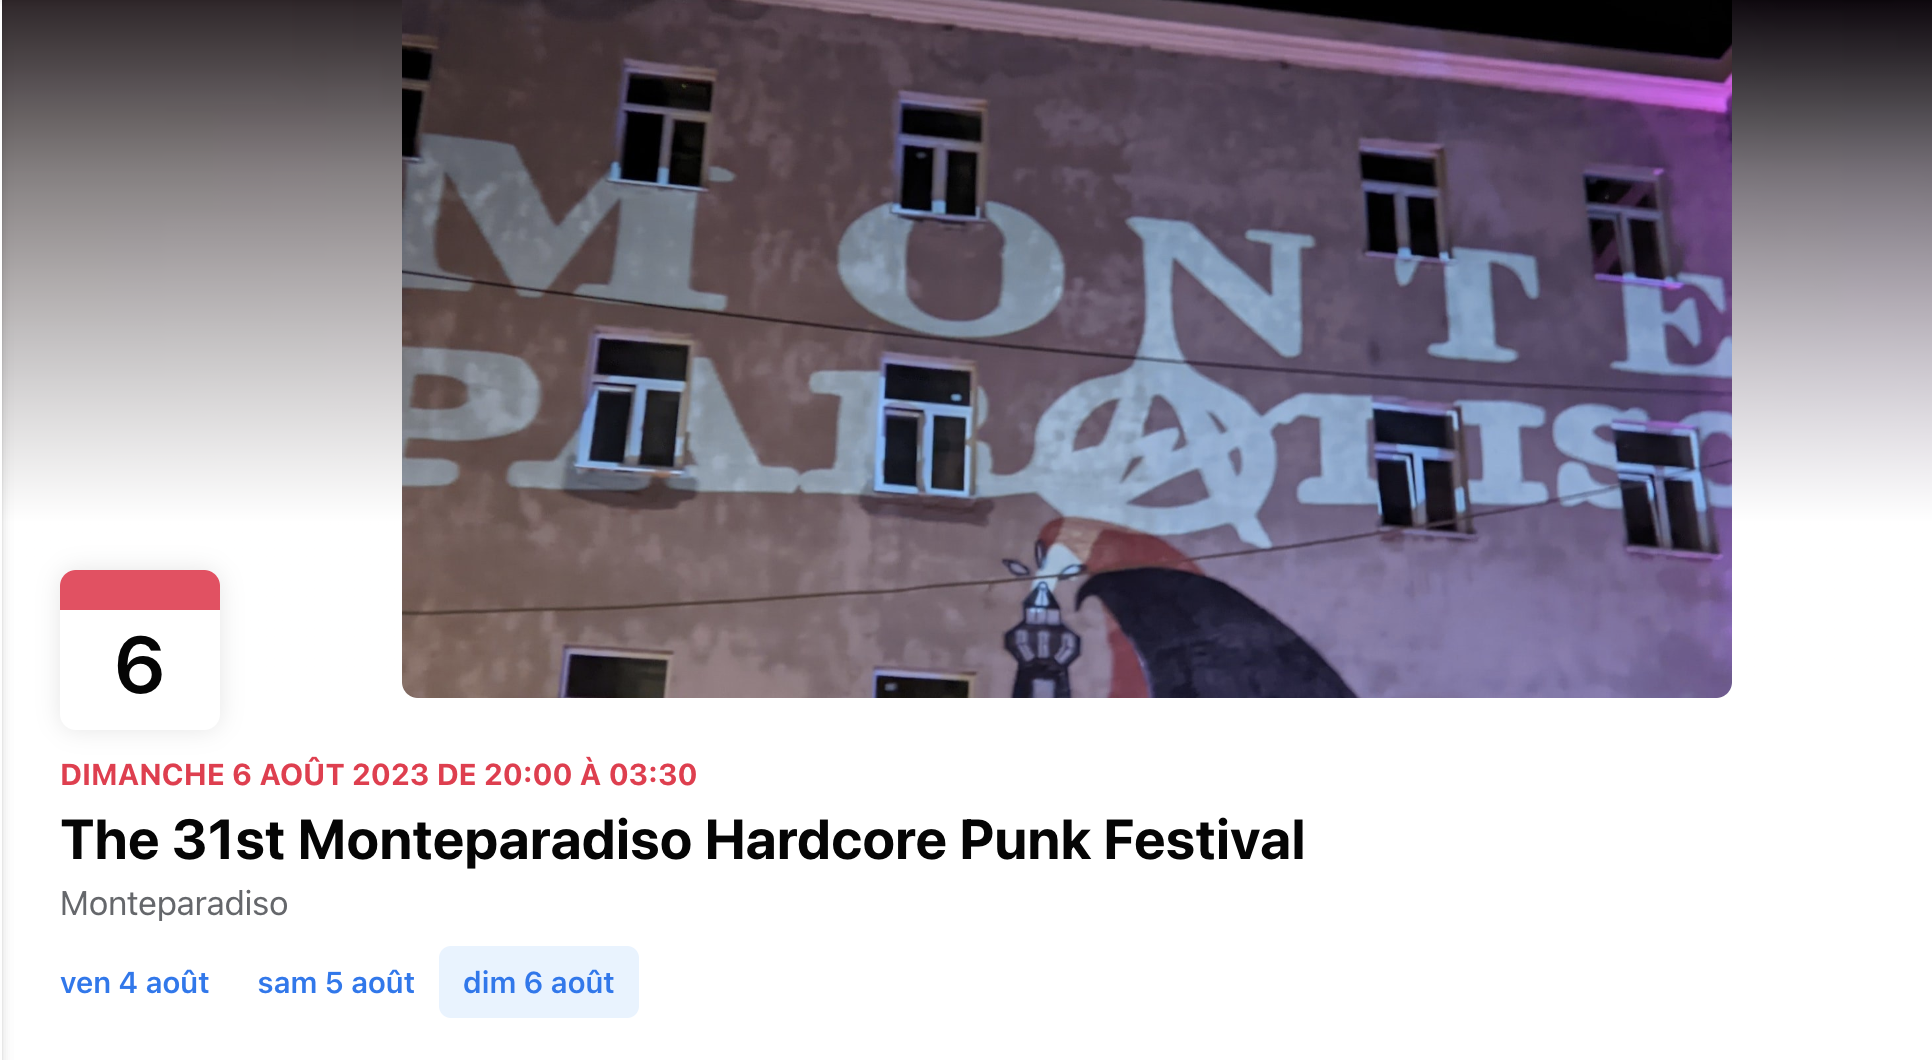 The 31st Monteparadiso Hardcore Punk Festival